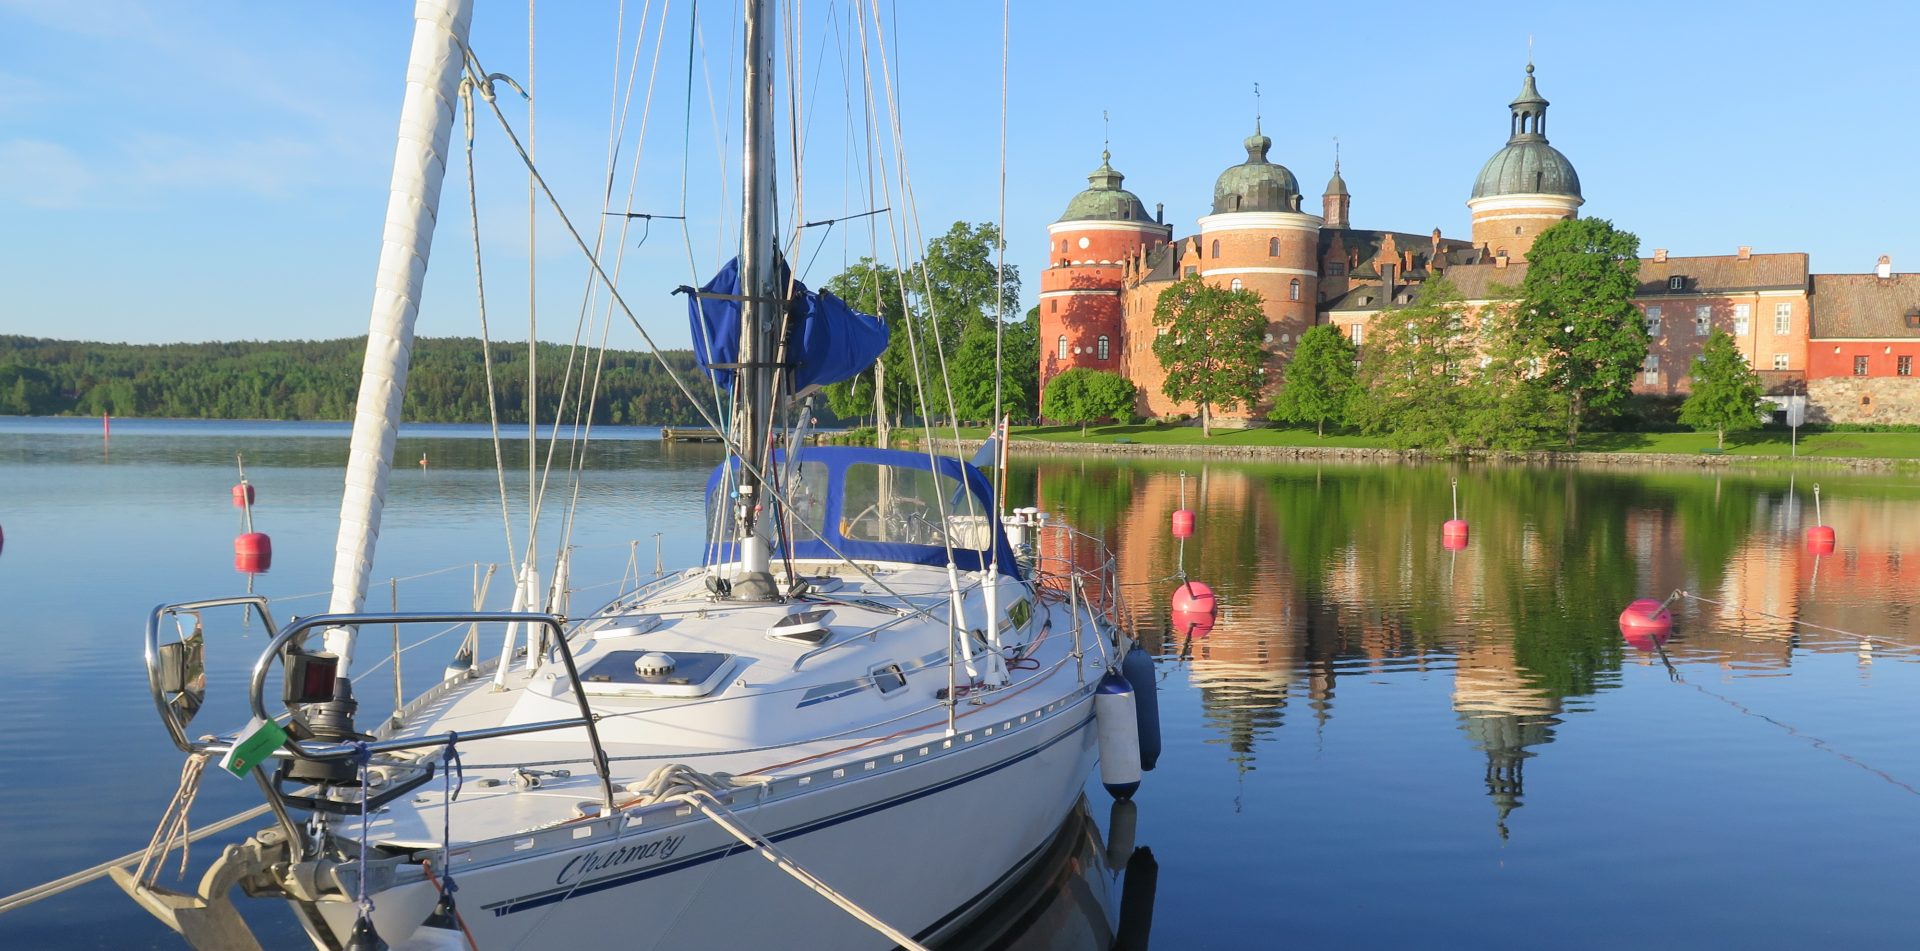 Tag: Prince Olav's Harbour